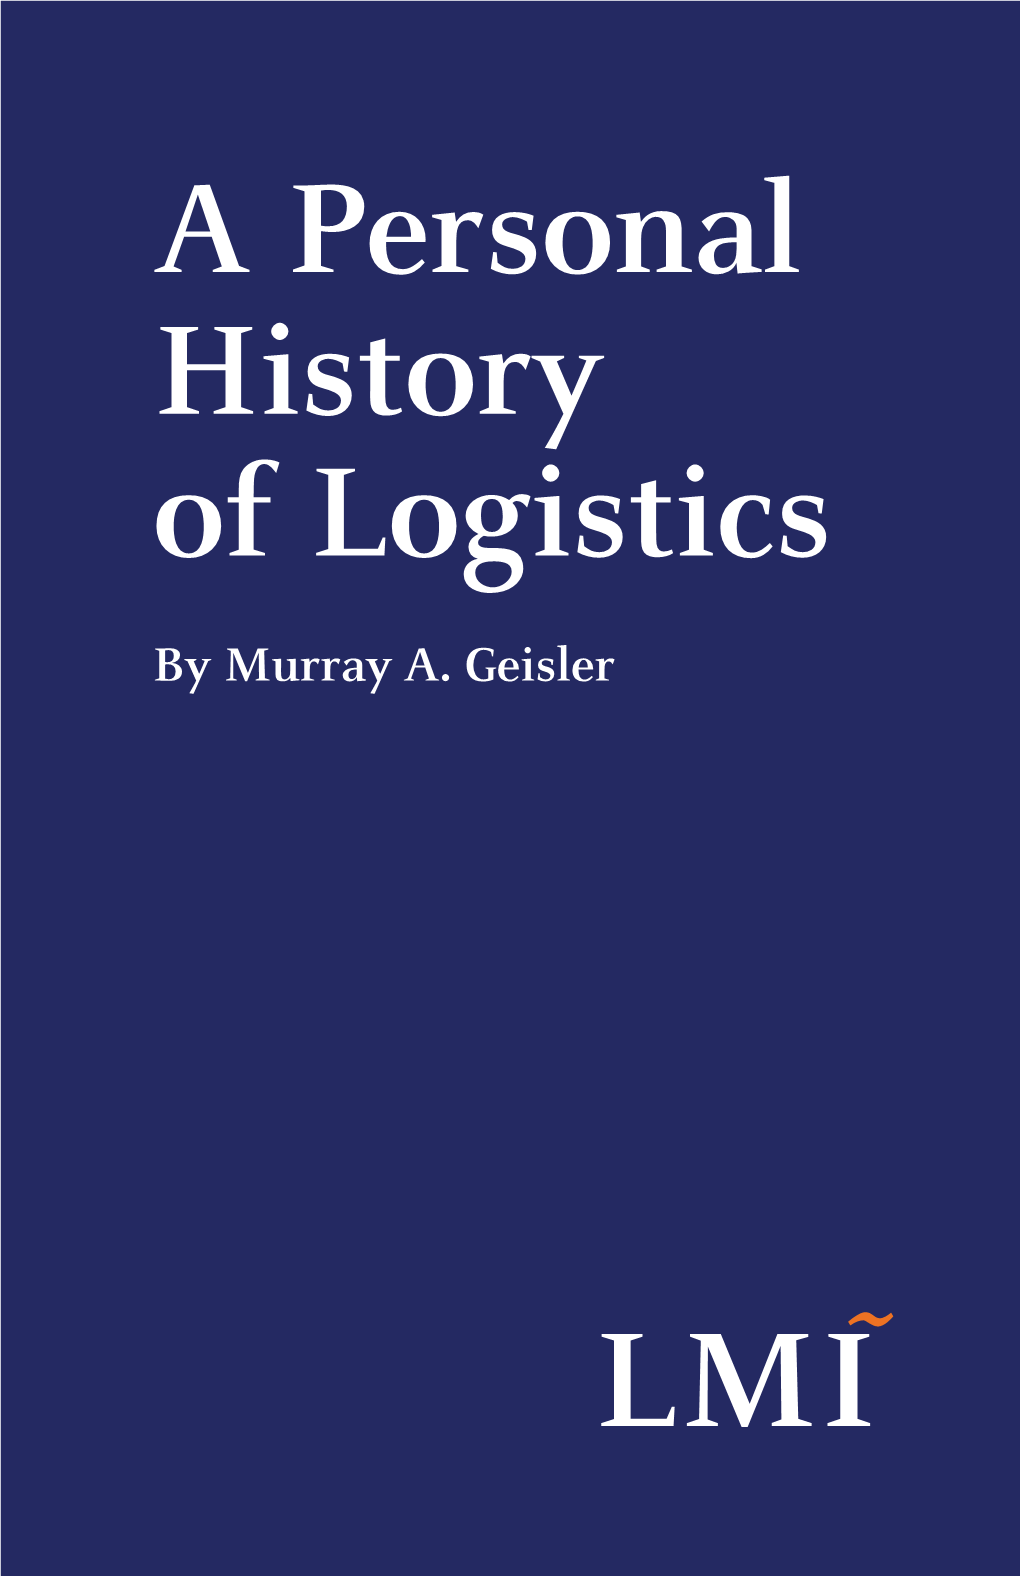 A Personal History of Logistics